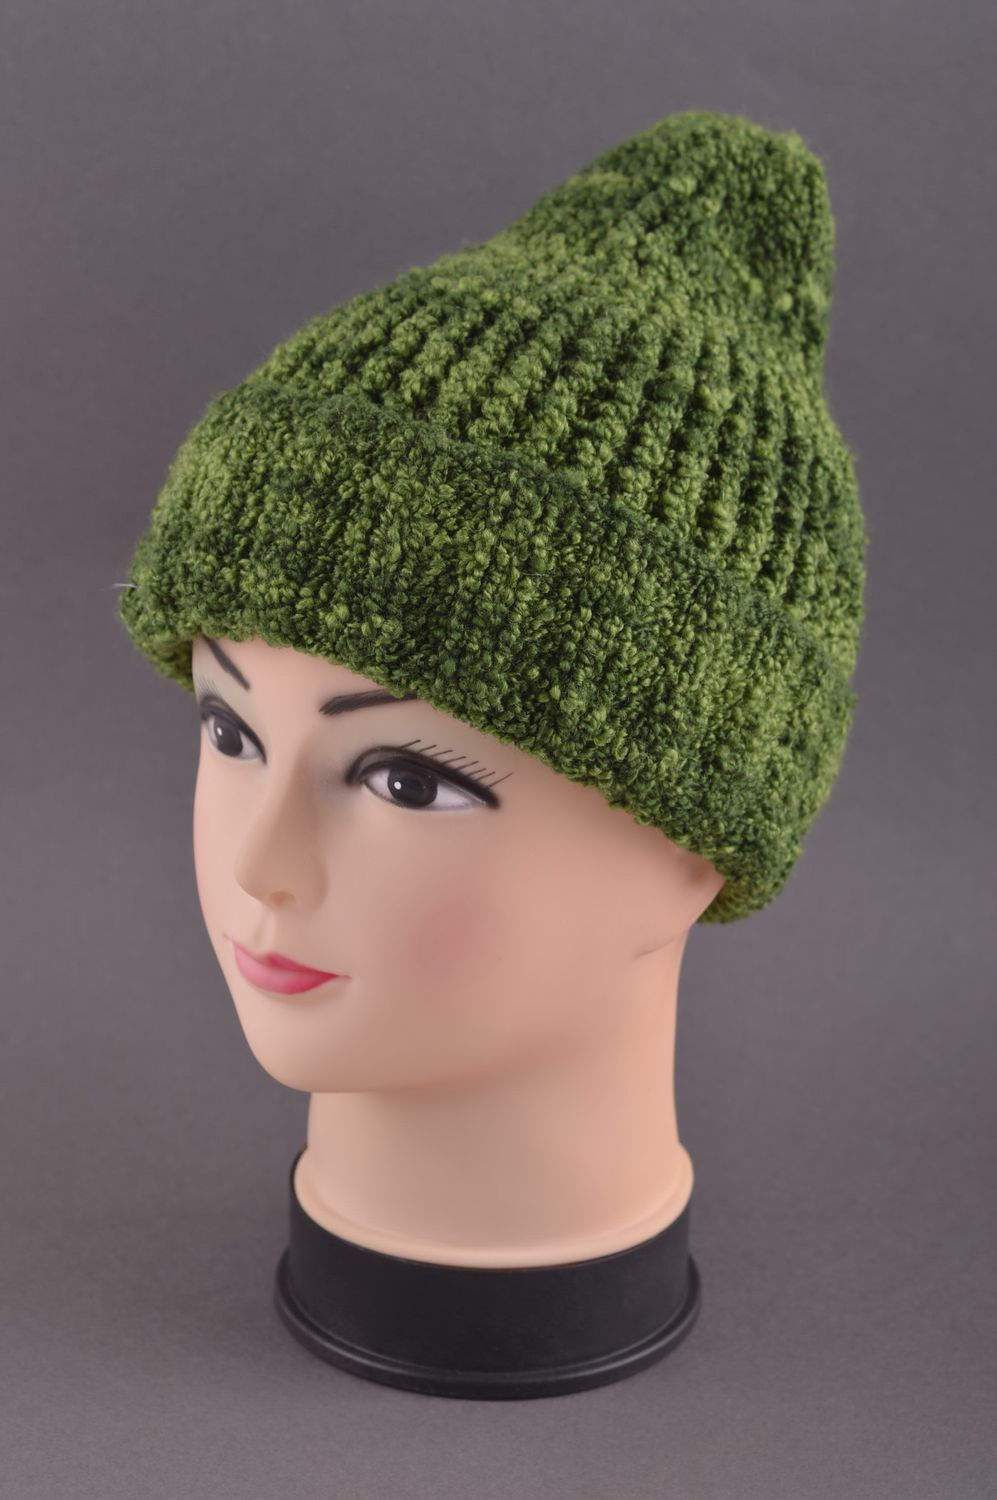 Handmade knitted hat winter hat for women winter hat winter accessories photo 1